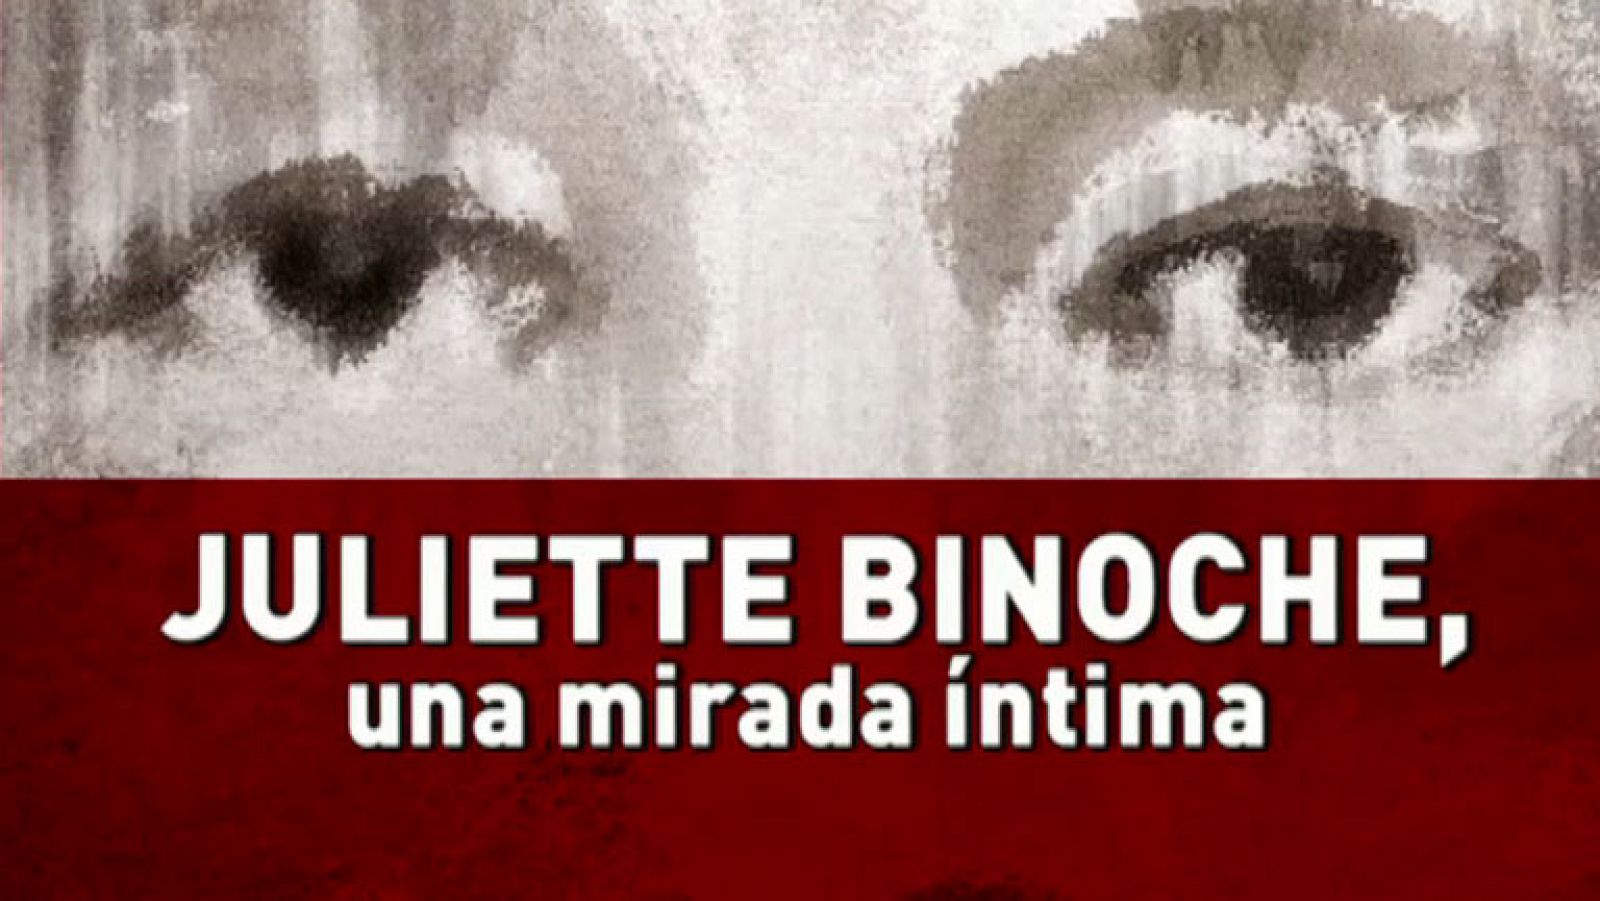 Juliette Binoche, una mirada íntima - Avance